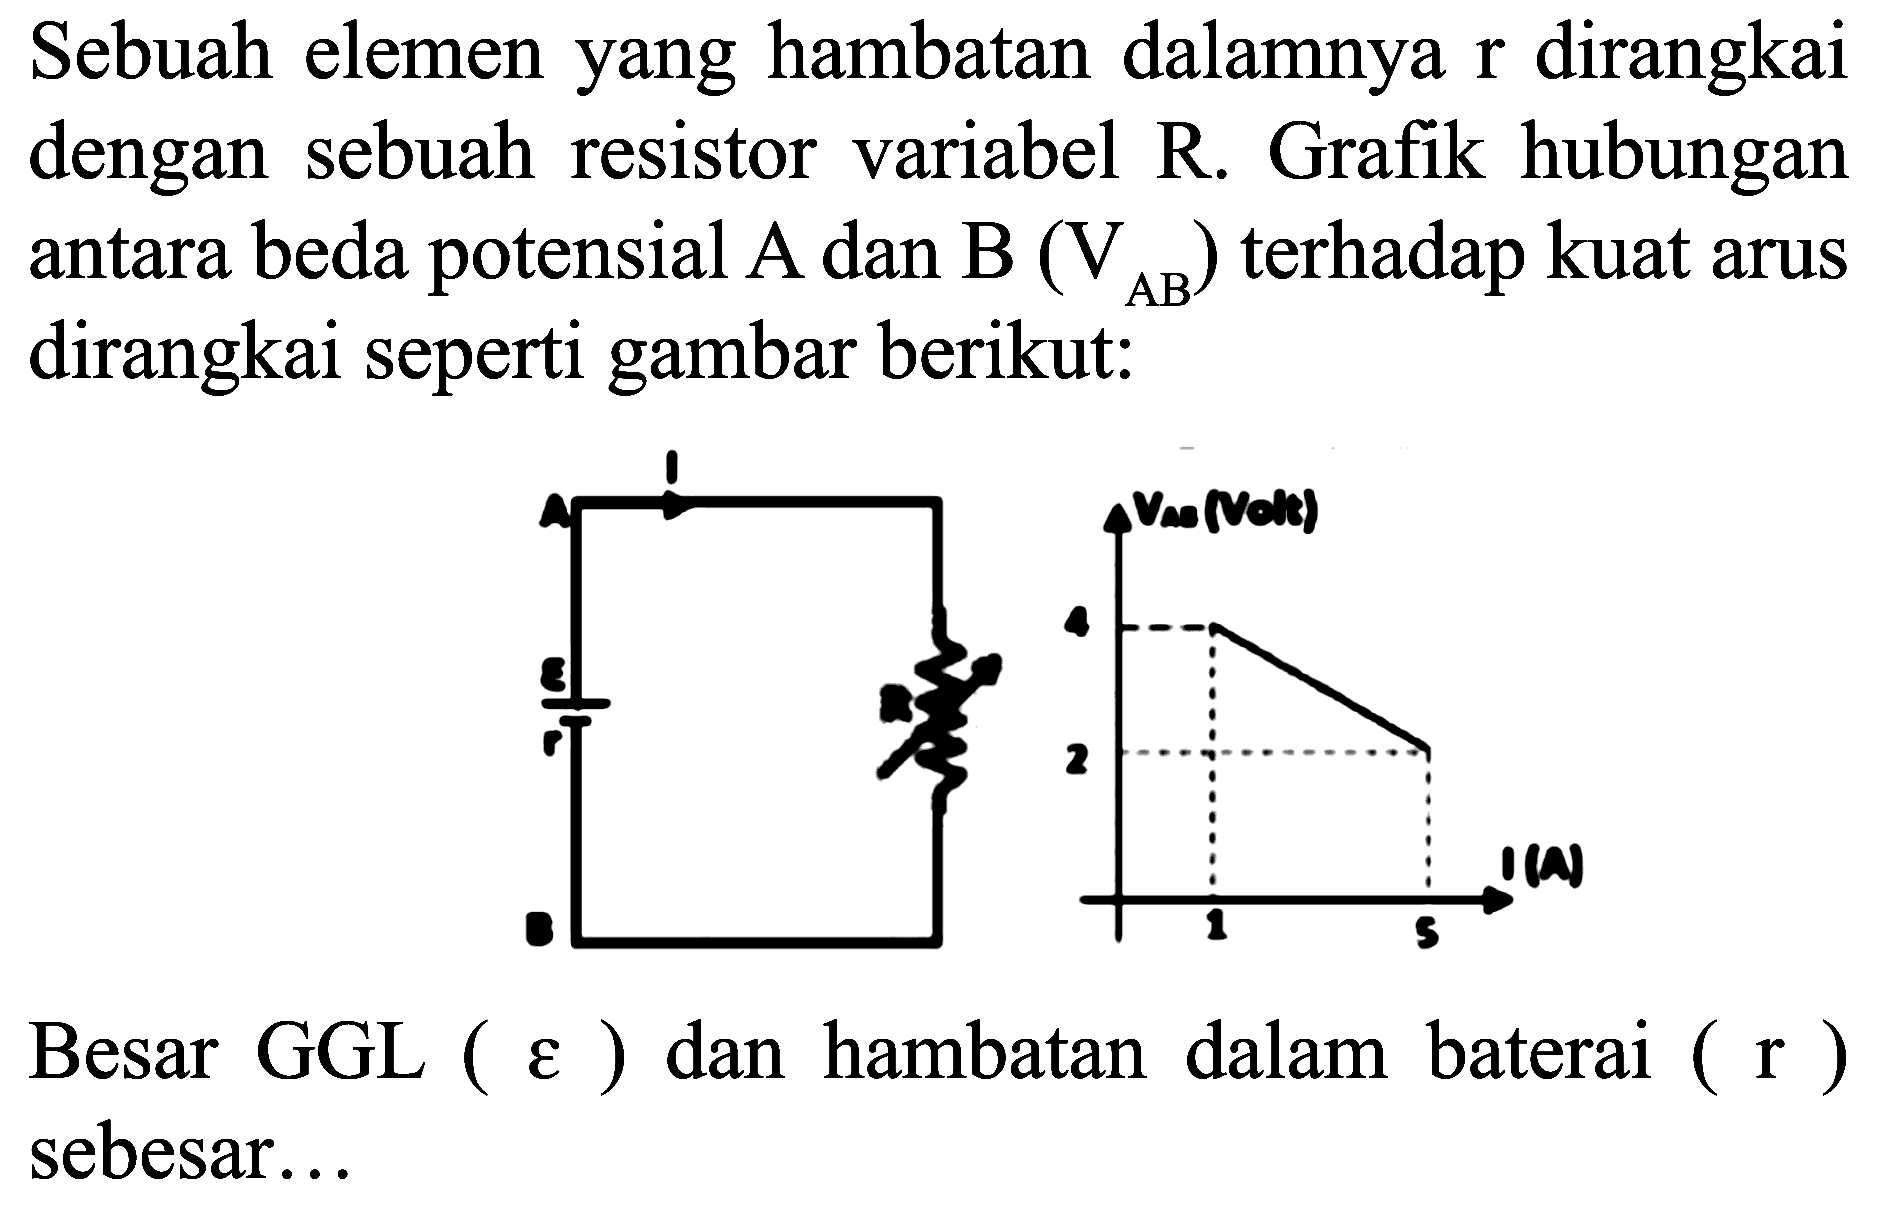 Sebuah elemen yang hambatan dalamnya r dirangkai dengan sebuah resistor variabel  R . Grafik hubungan antara beda potensial  A  dan  B(V_(AB))  terhadap kuat arus dirangkai seperti gambar berikut:

Besar GGL  (varepsilon)  dan hambatan dalam baterai  (r)  sebesar...